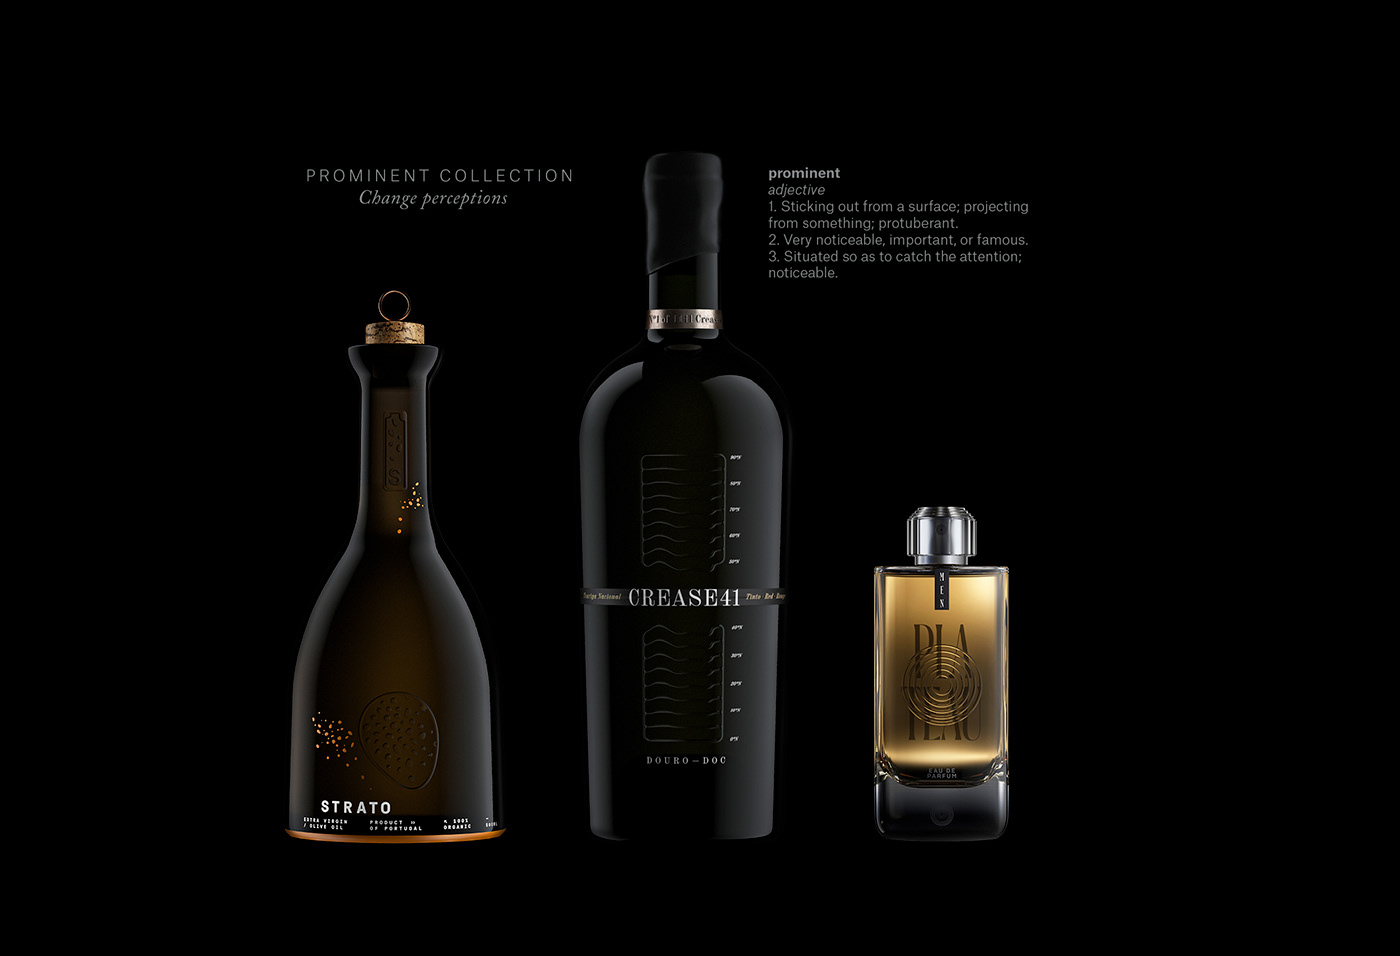 avery Dennison emboss Labelglass oliveoil perfume relief wine